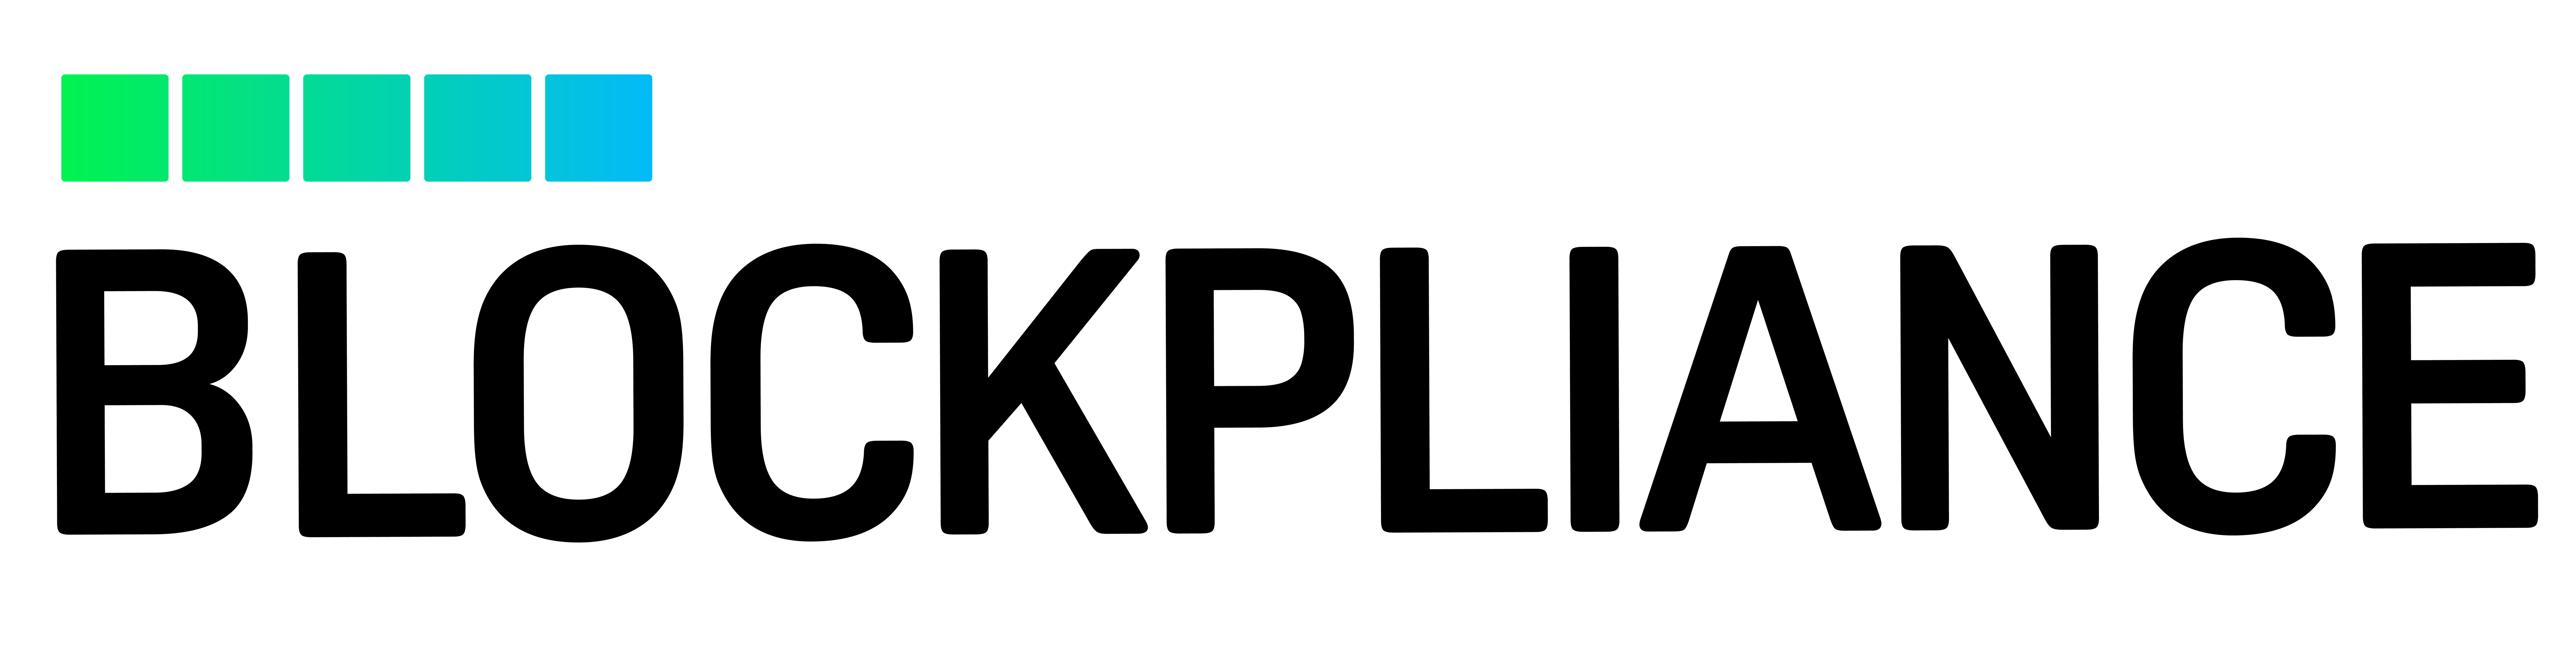 Blockpliance Logo